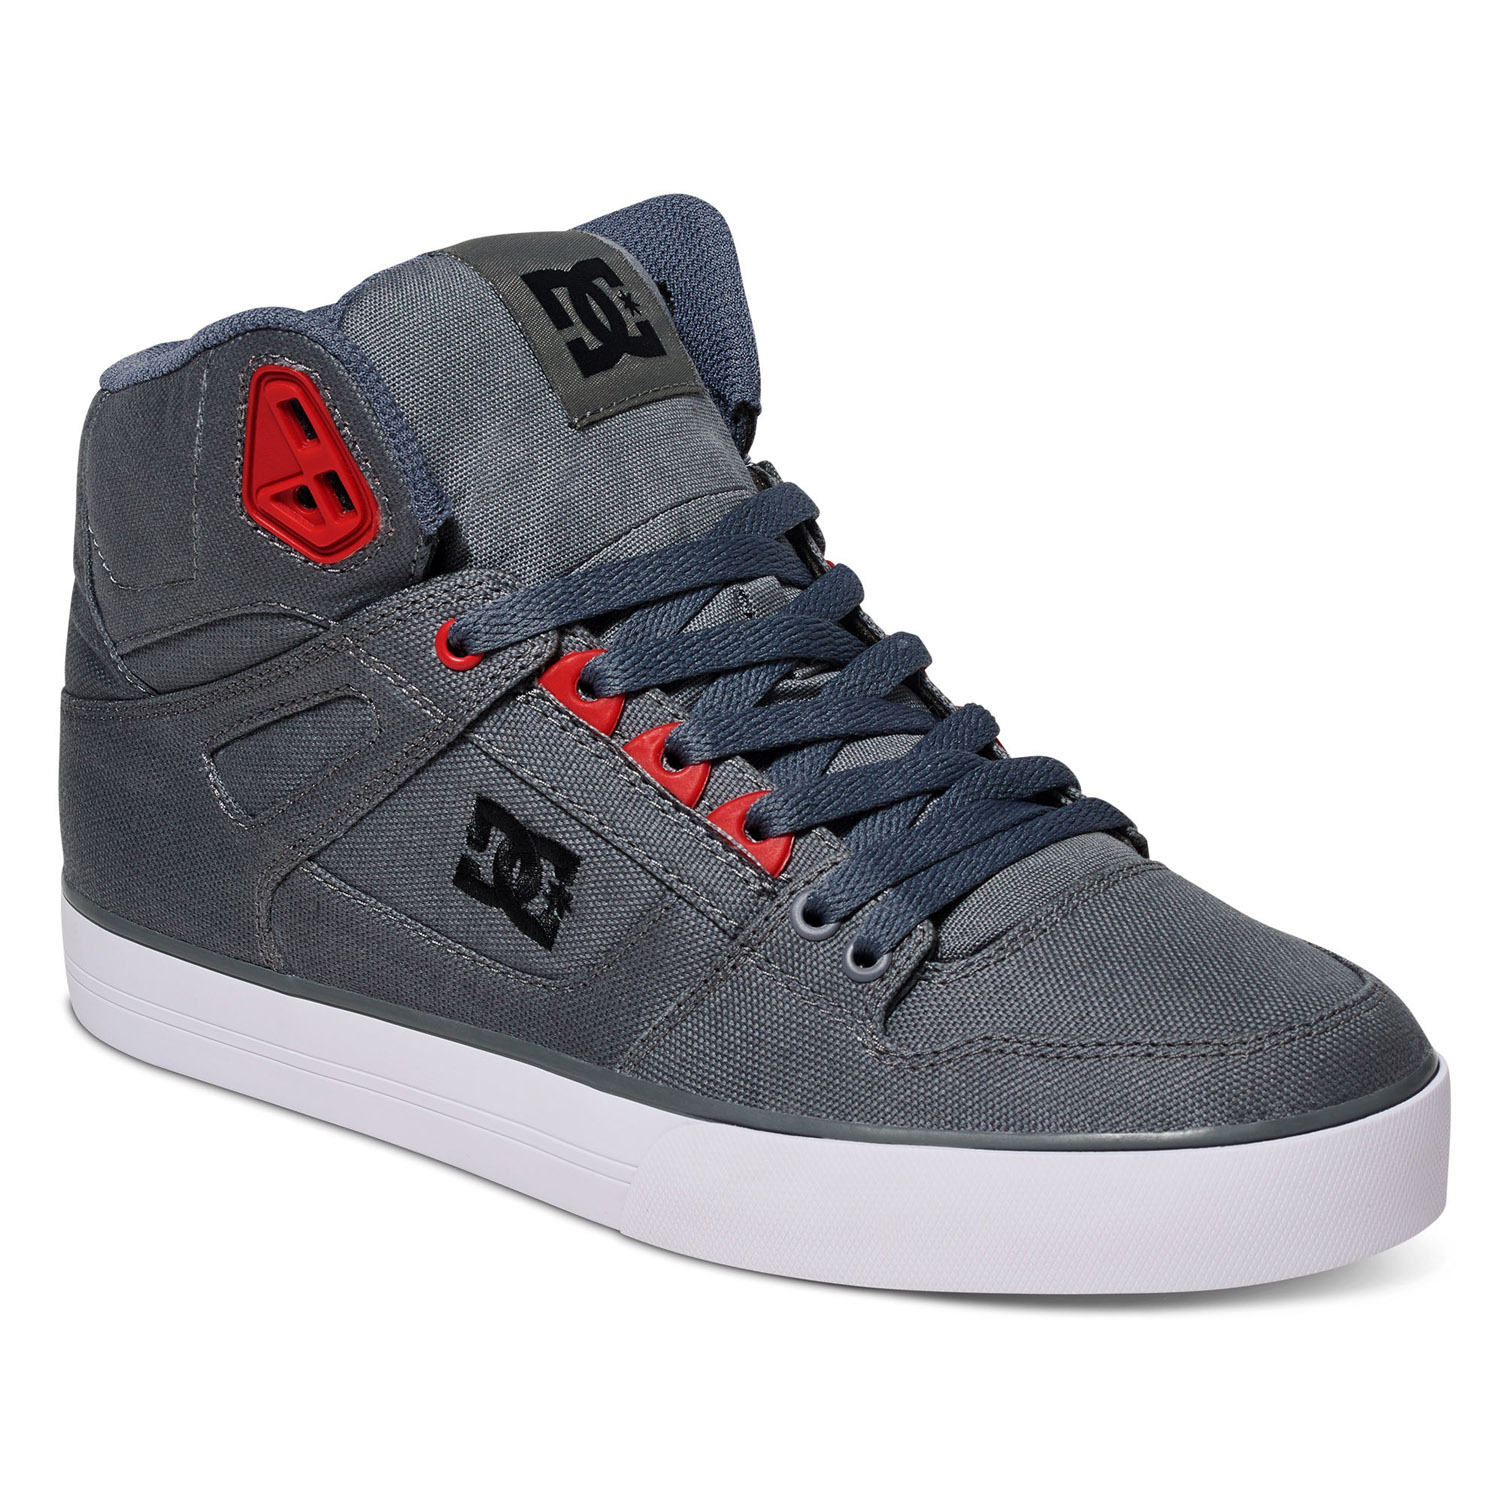 DC shoes Spartan High WC TX Grey/Black/Red